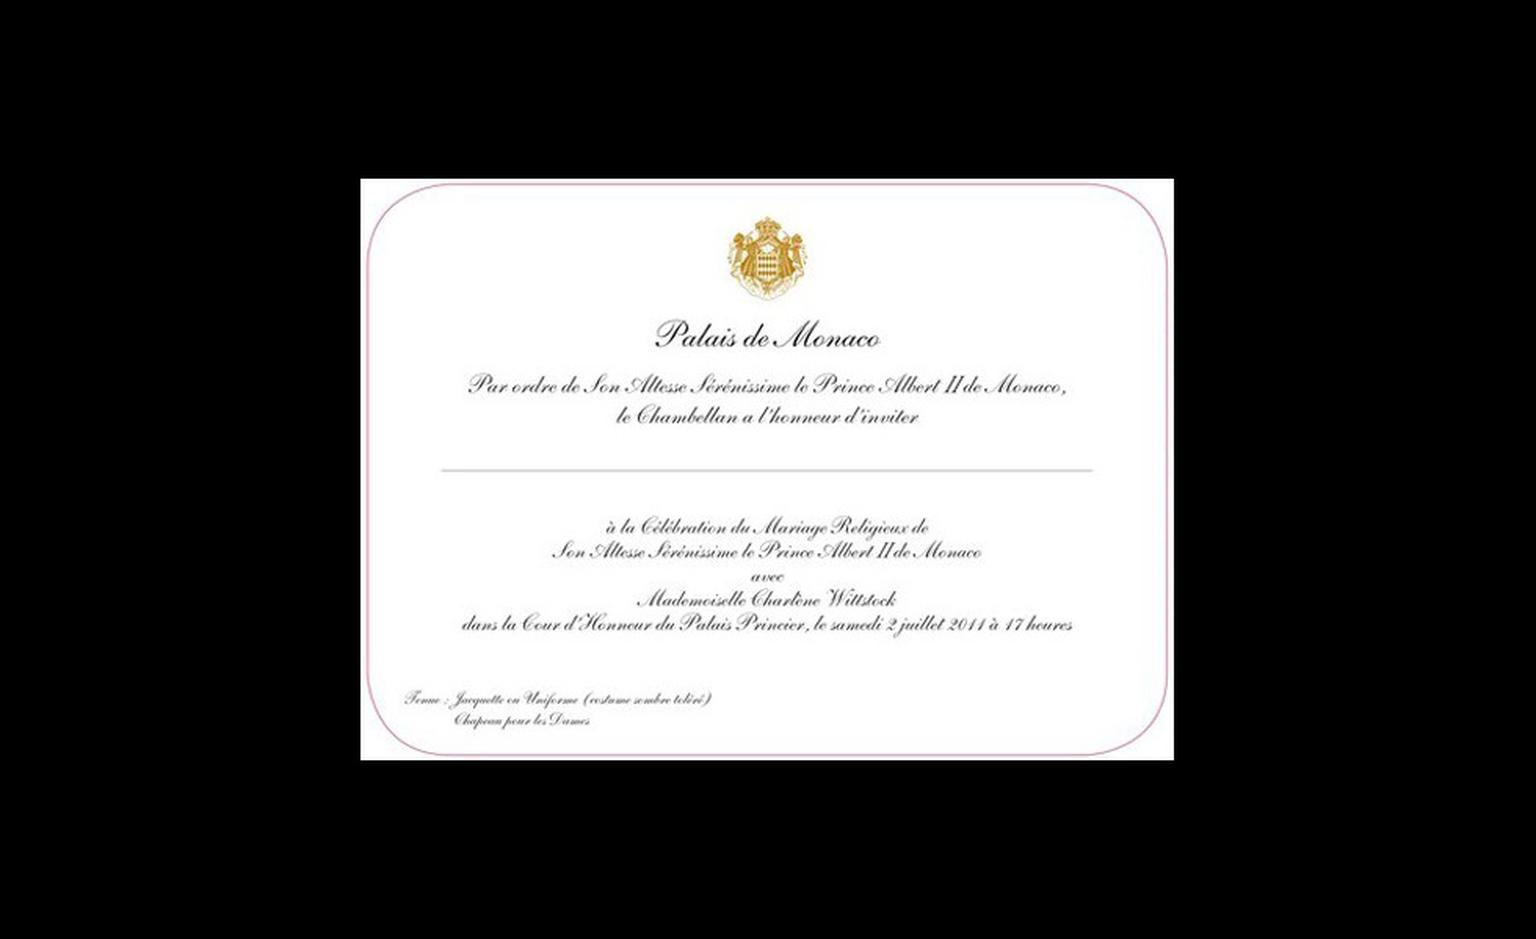 Invitation to the Monaco Princely wedding of Prince Albert II to Charlene Wittstock. Photo: Prince's Palace of Monaco